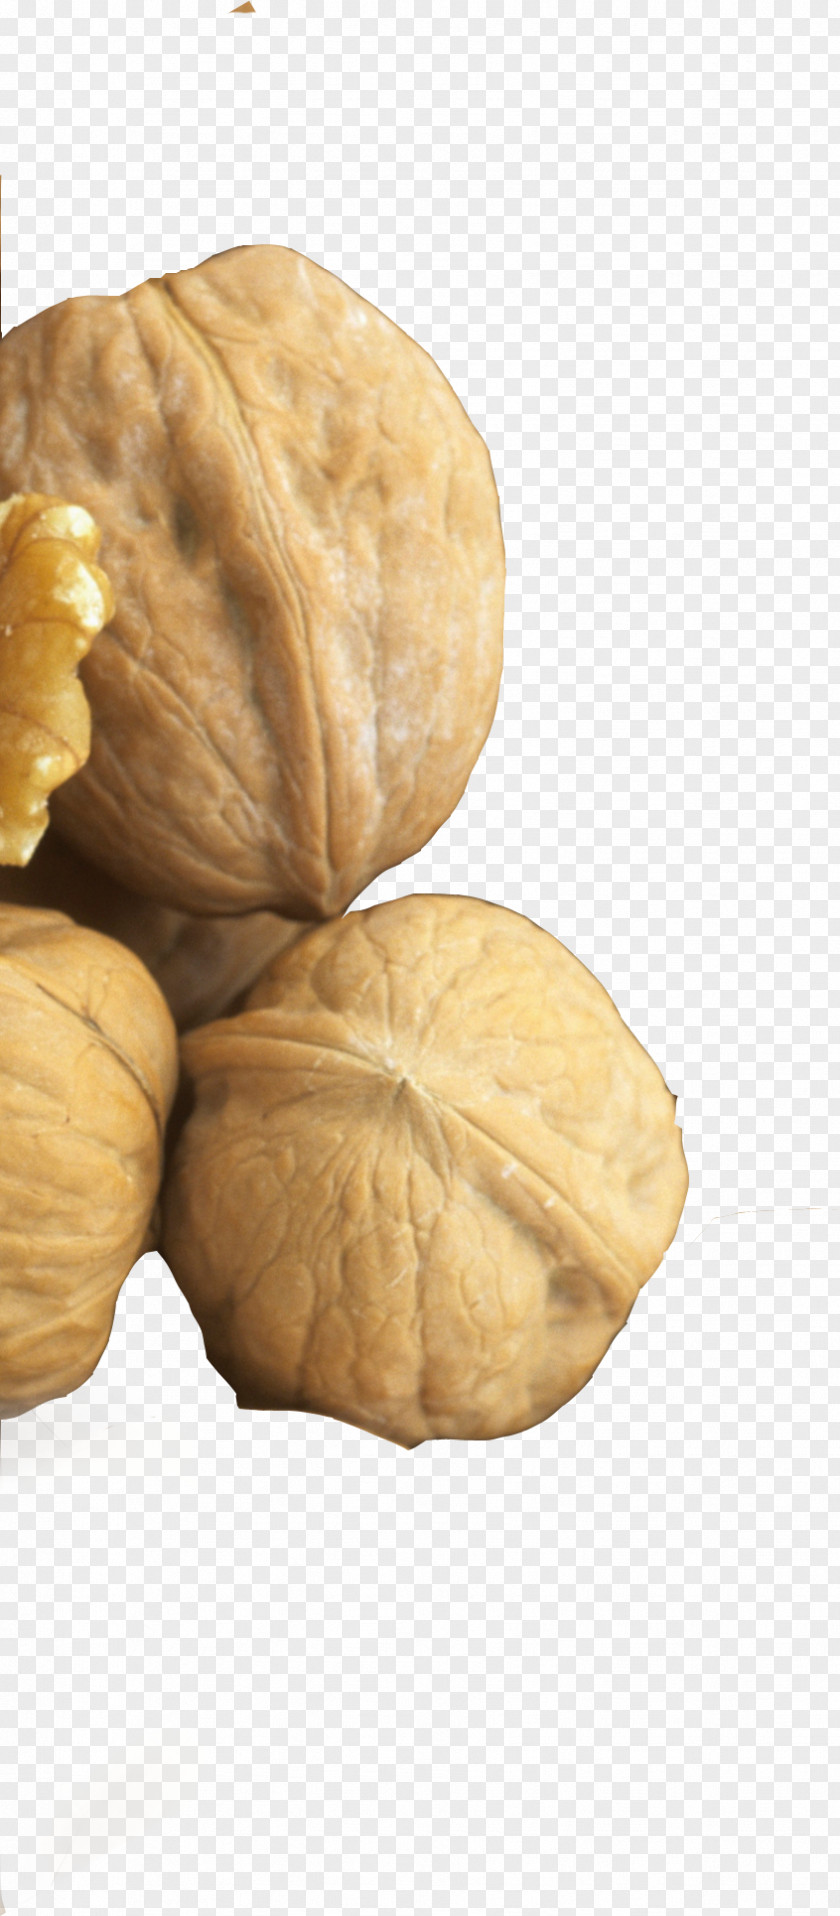 Walnut Five Grains Ingredient Food Whole Grain PNG